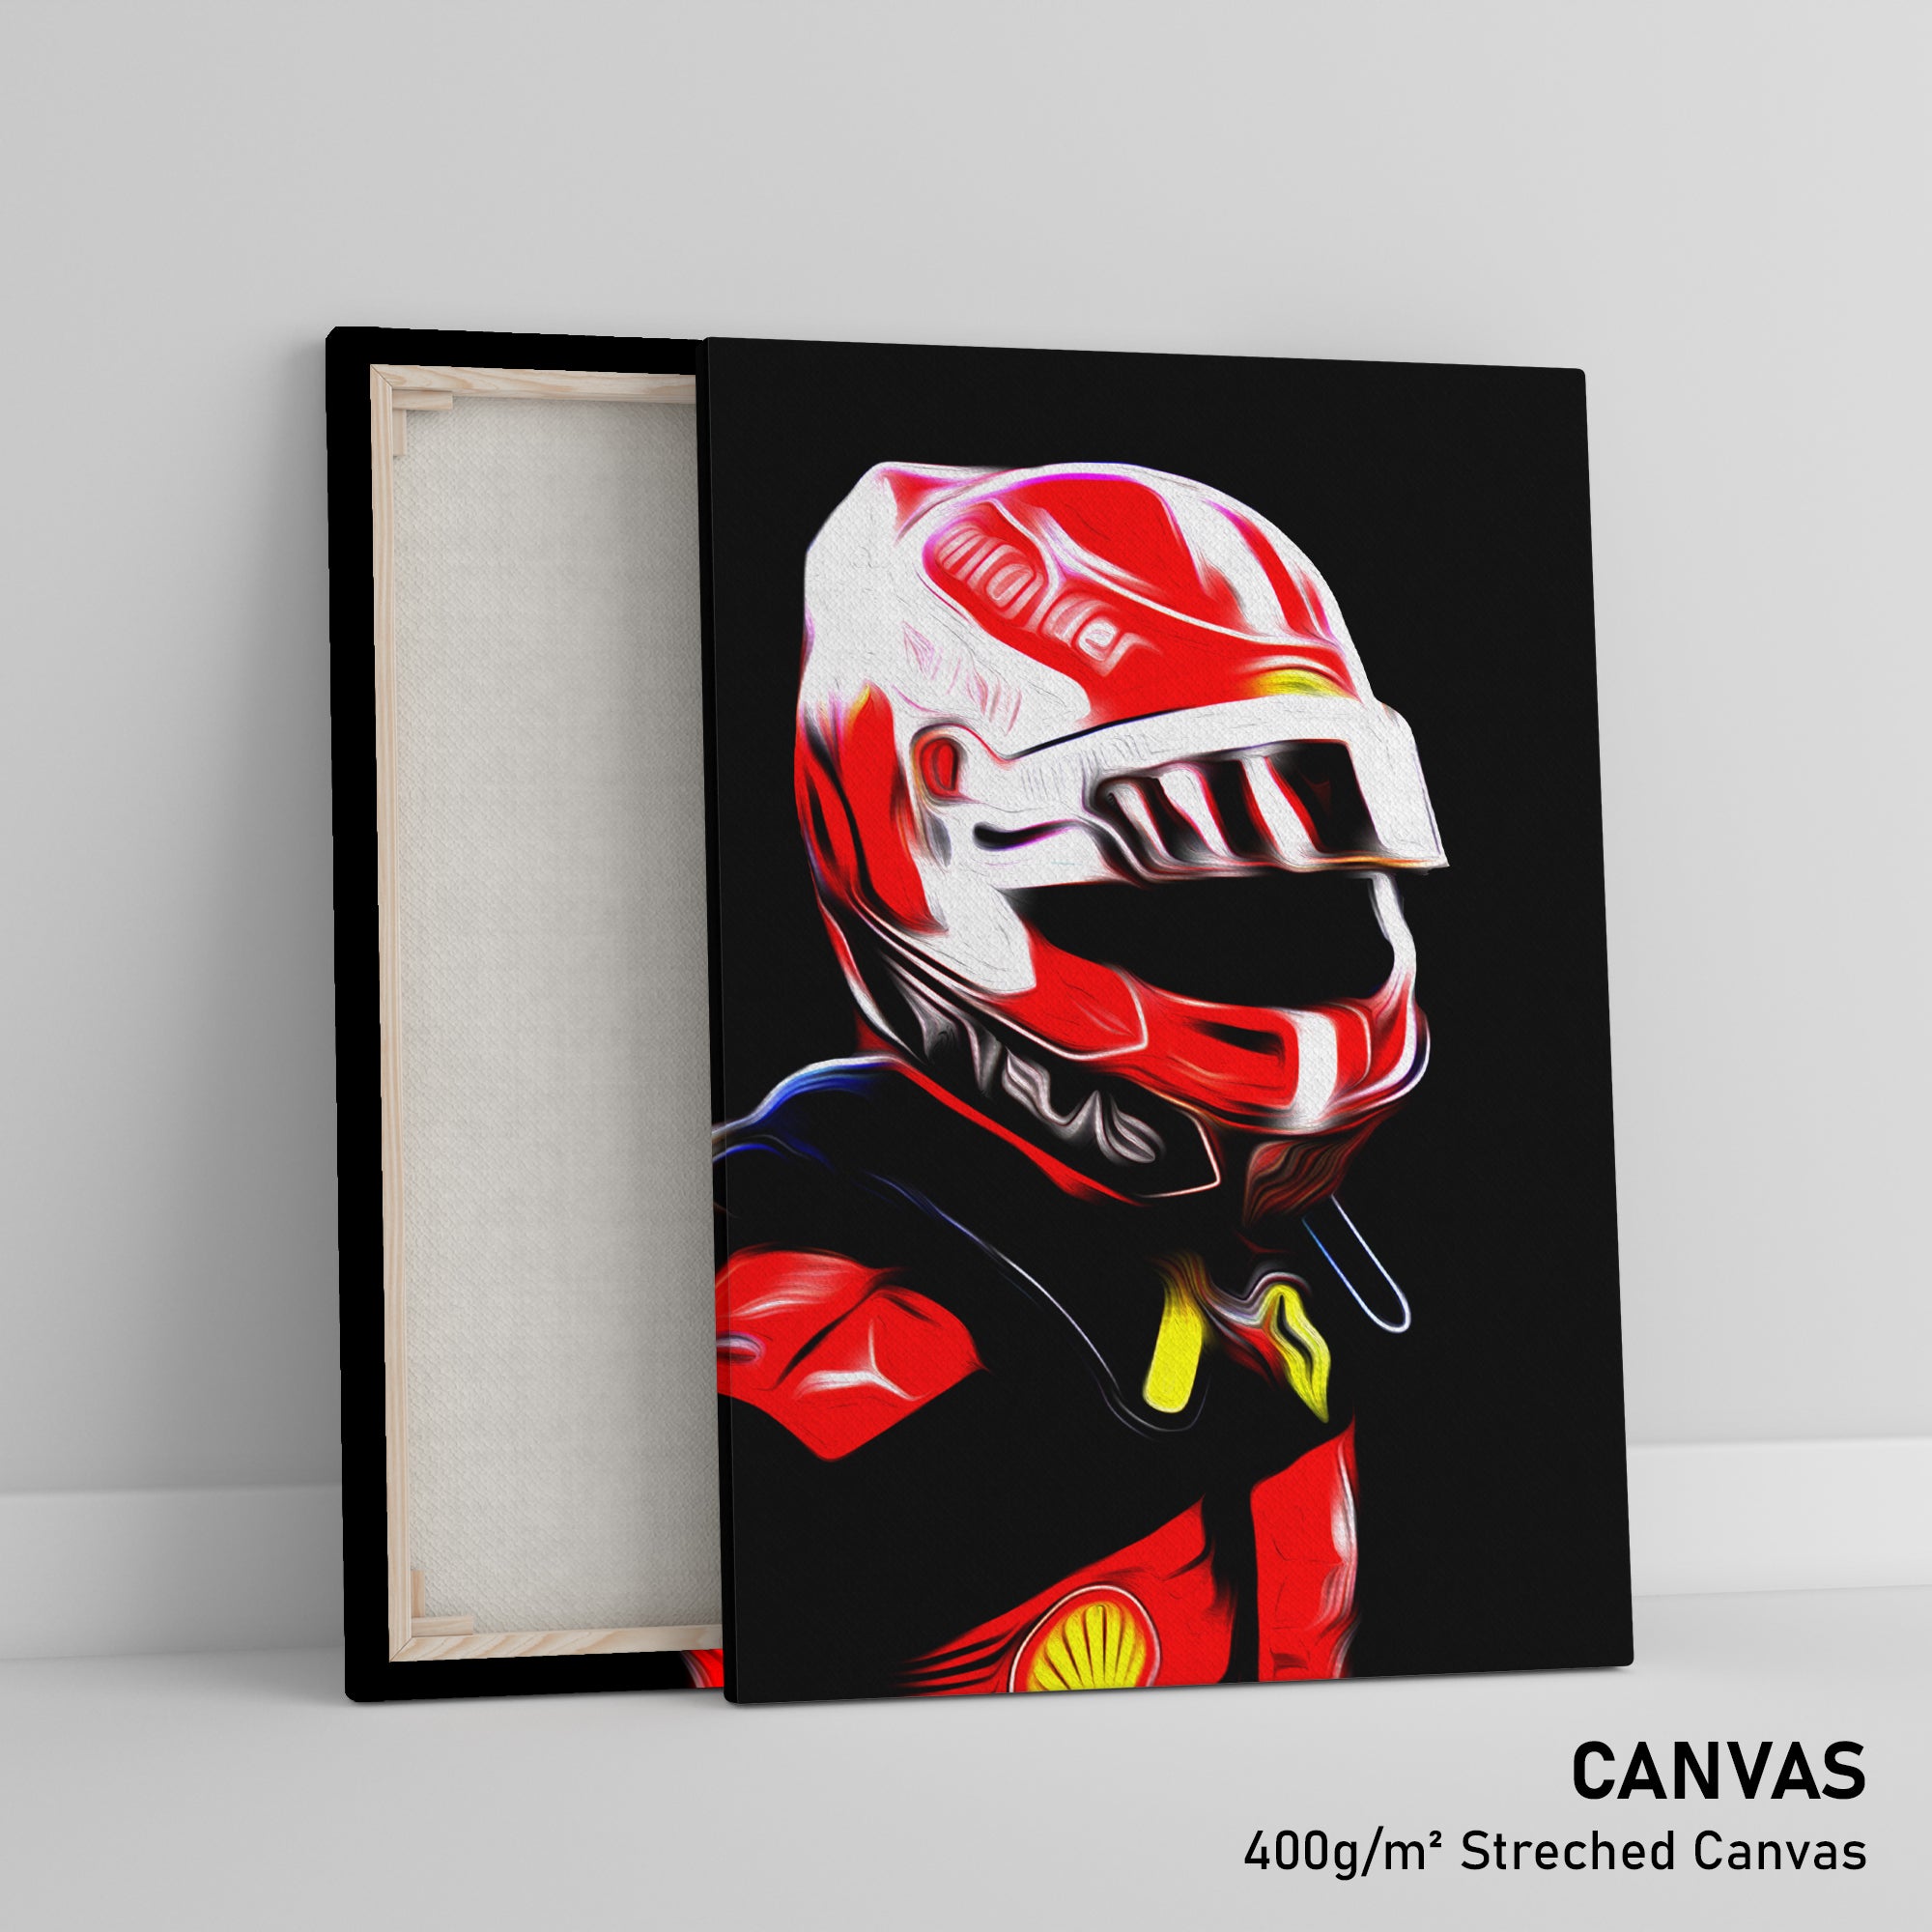 Charles Leclerc Ferrari F1 Art Print for Sale by jffamily